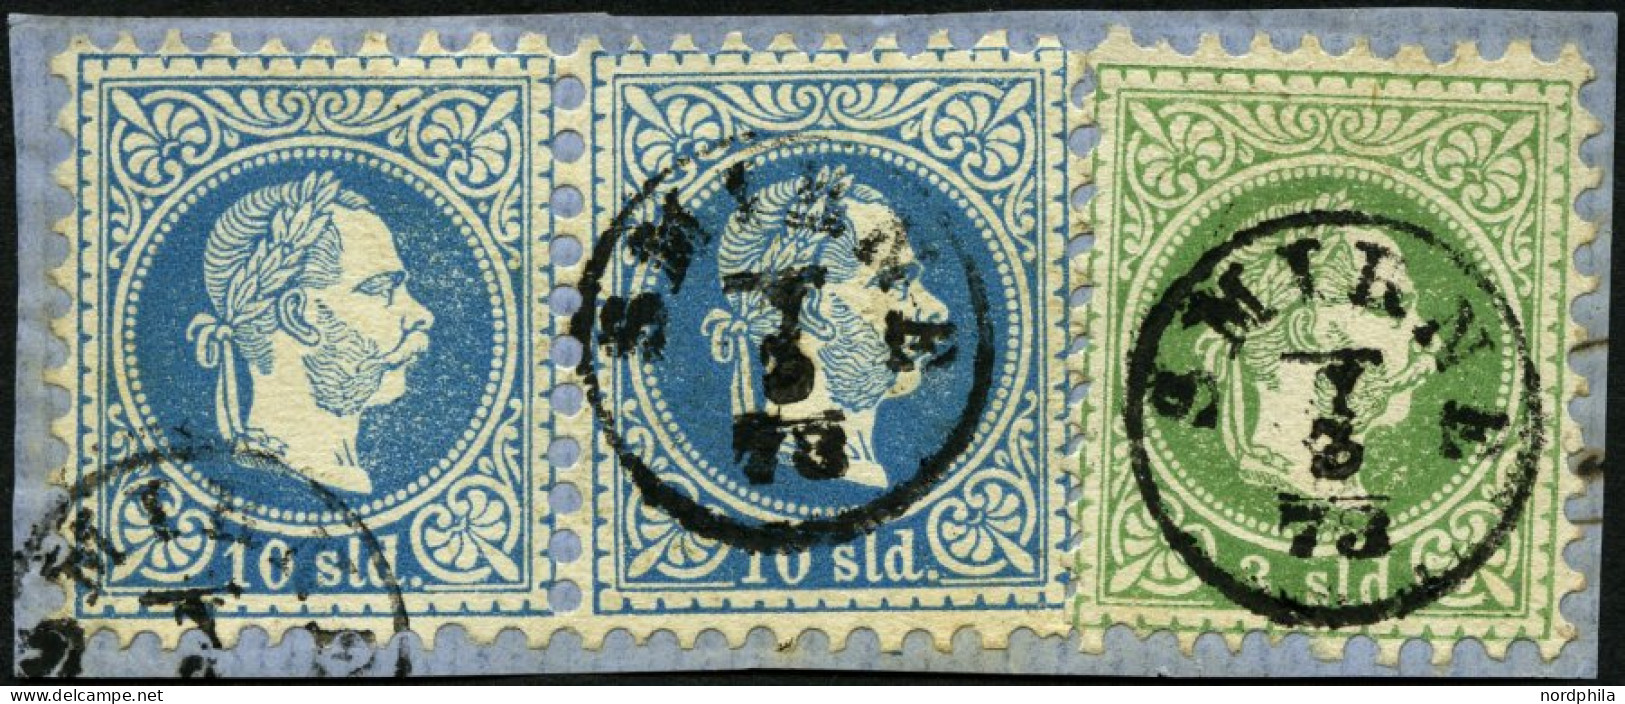 POST IN DER LEVANTE 2Ia,4Ia Paar BrfStk, 1867, 2 So. Grün Und 10 So. Blau Im Waagerechten Paar, K1 SMIRNE, Dekoratives P - Oostenrijkse Levant